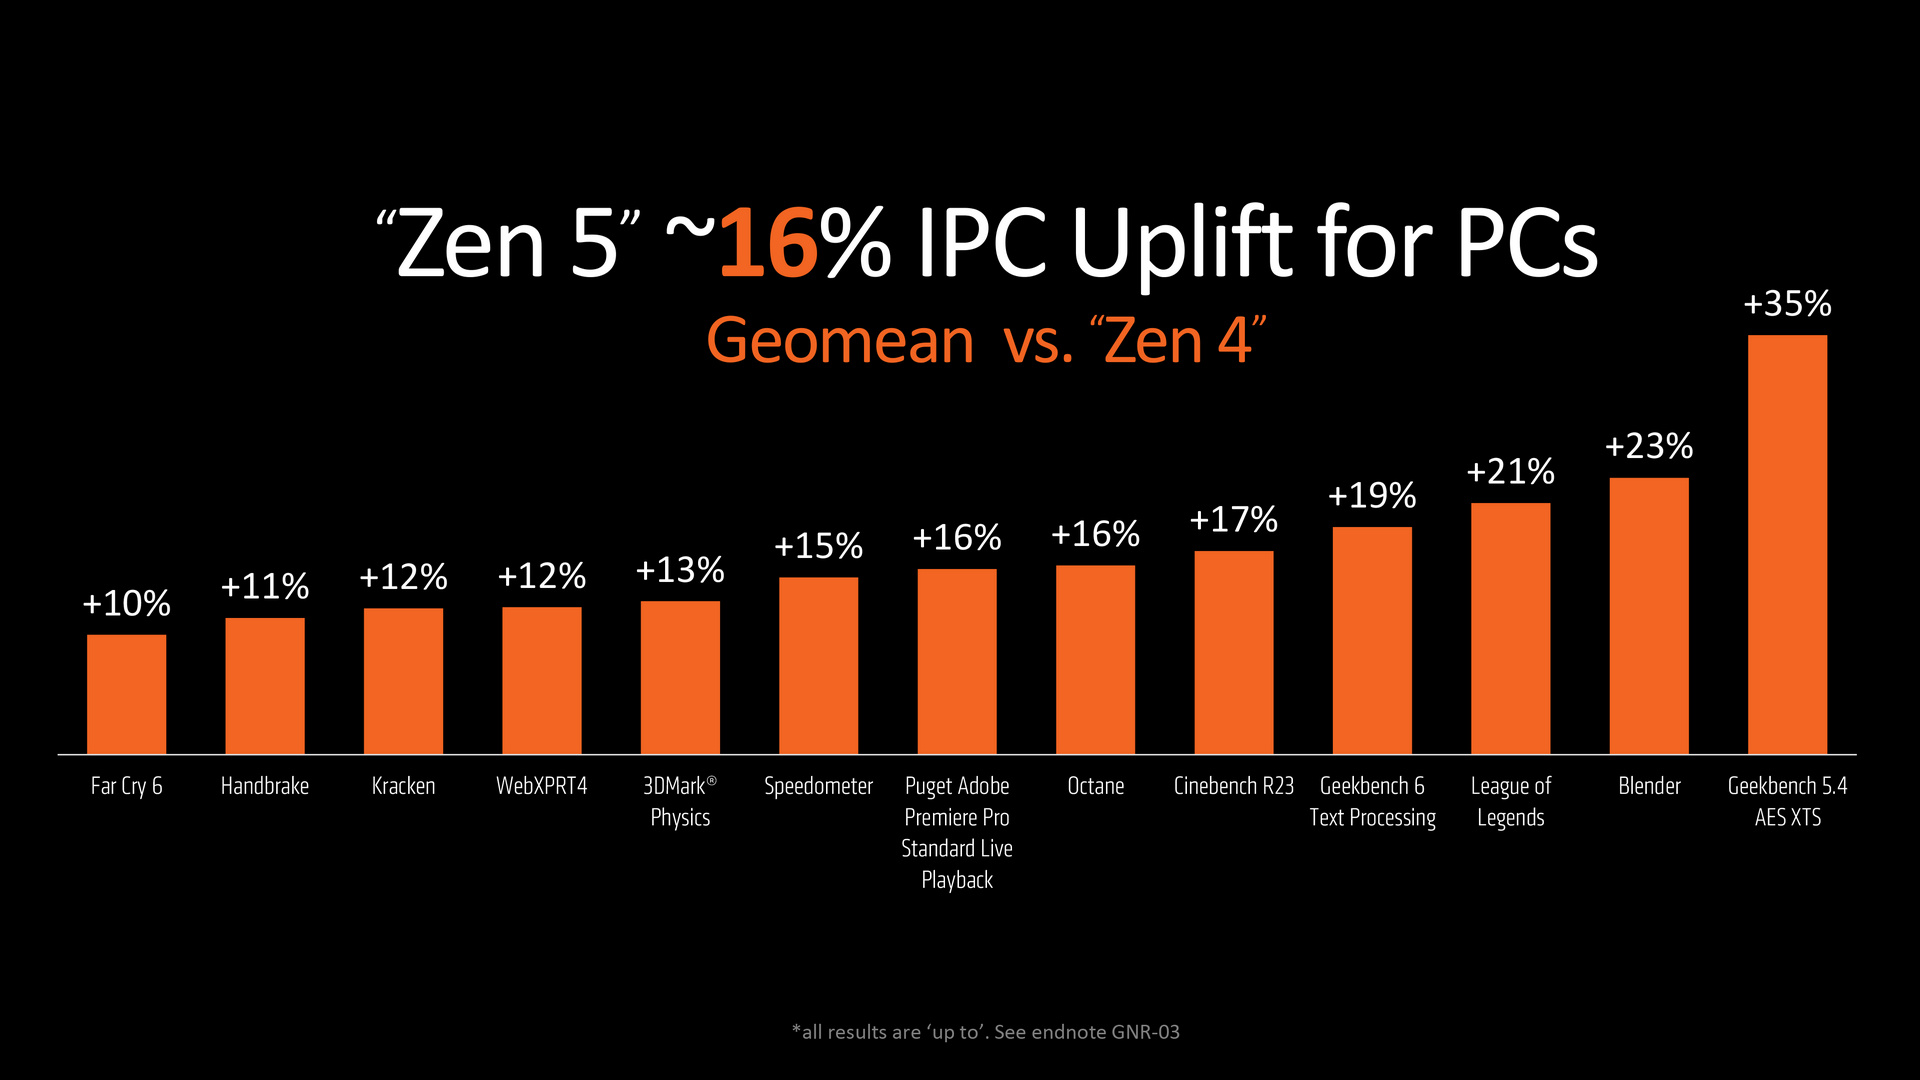 AMD Zen 5